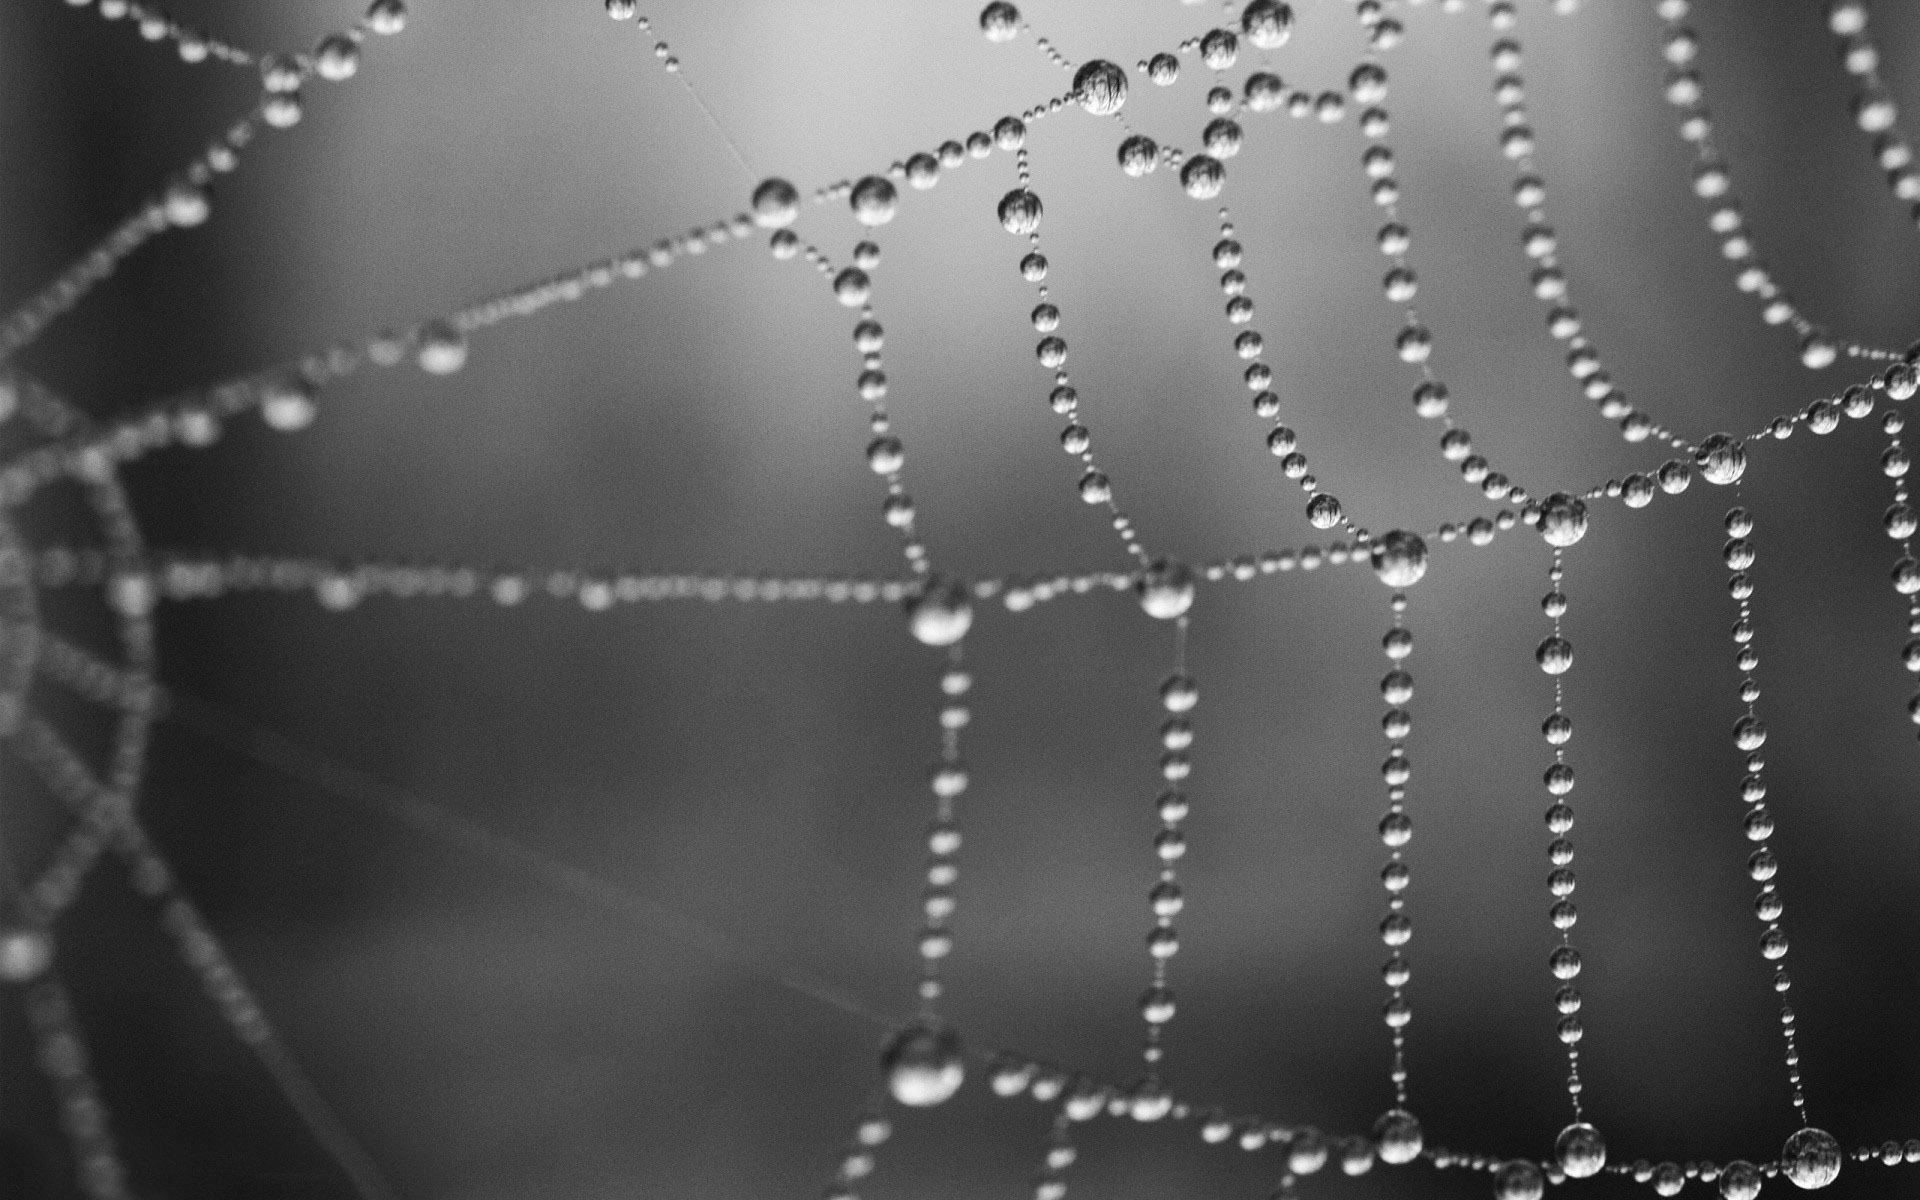 Wet spider web wallpaper